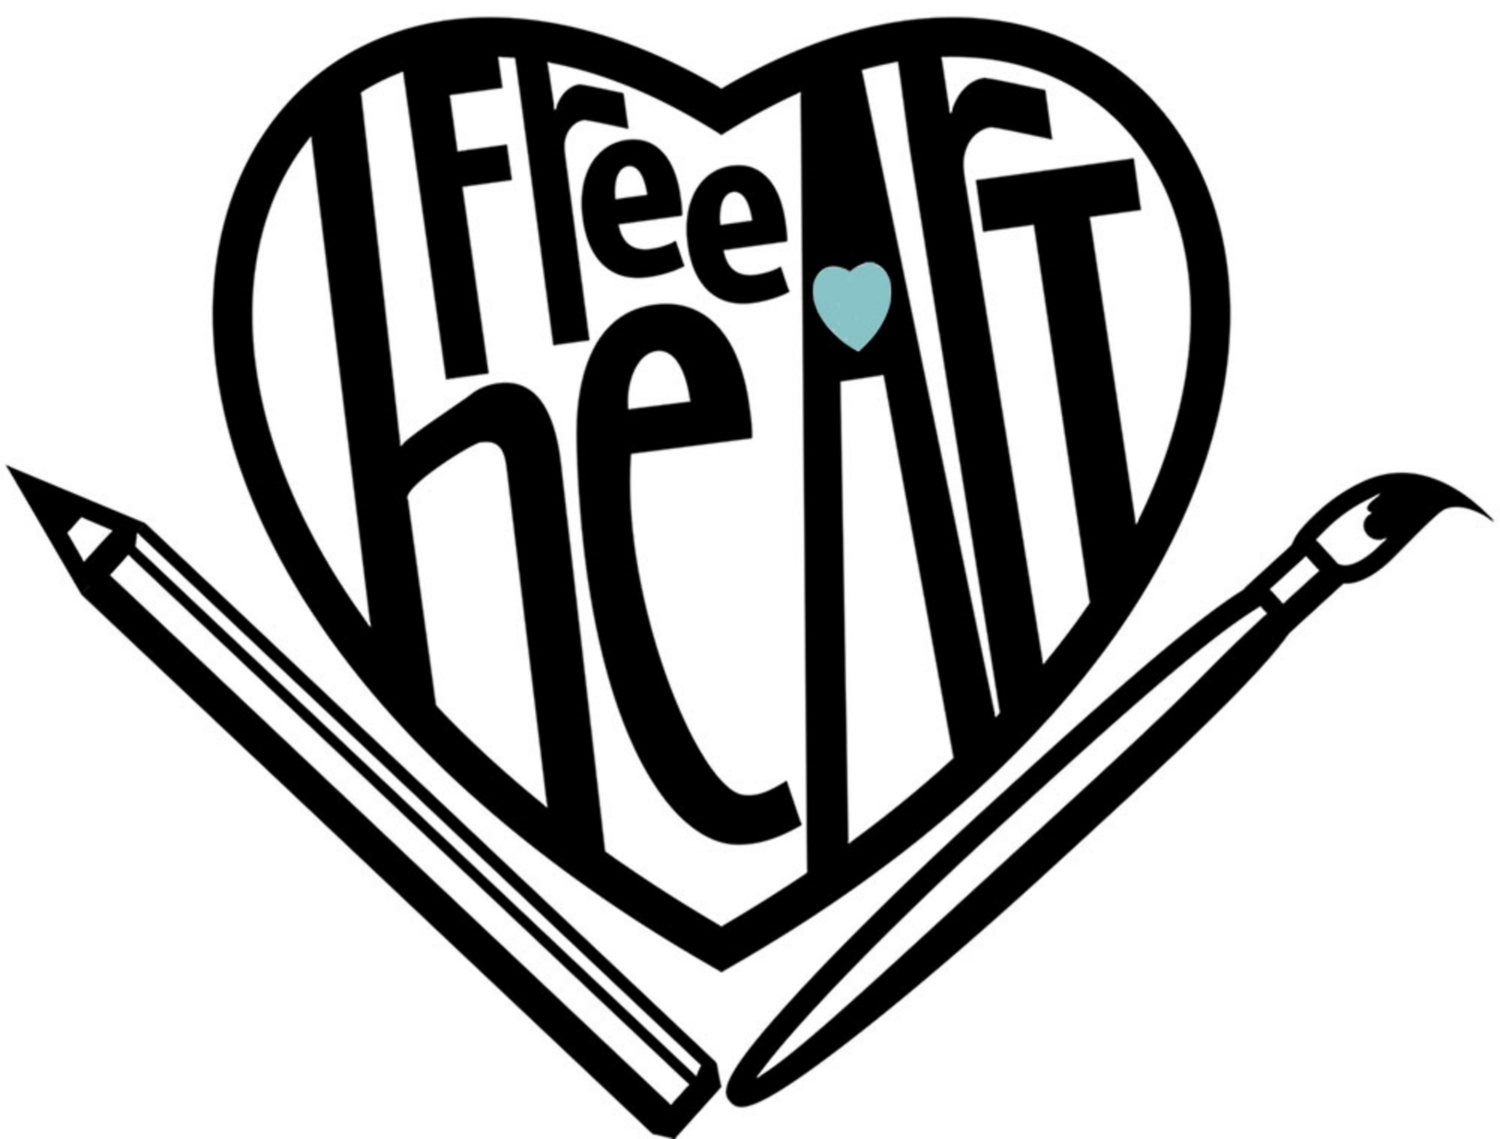 Free Heart, LLC